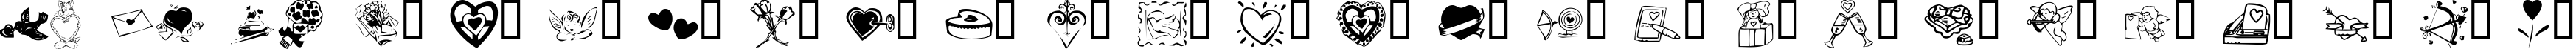 Пример написания английского алфавита шрифтом KR Valentine 2003